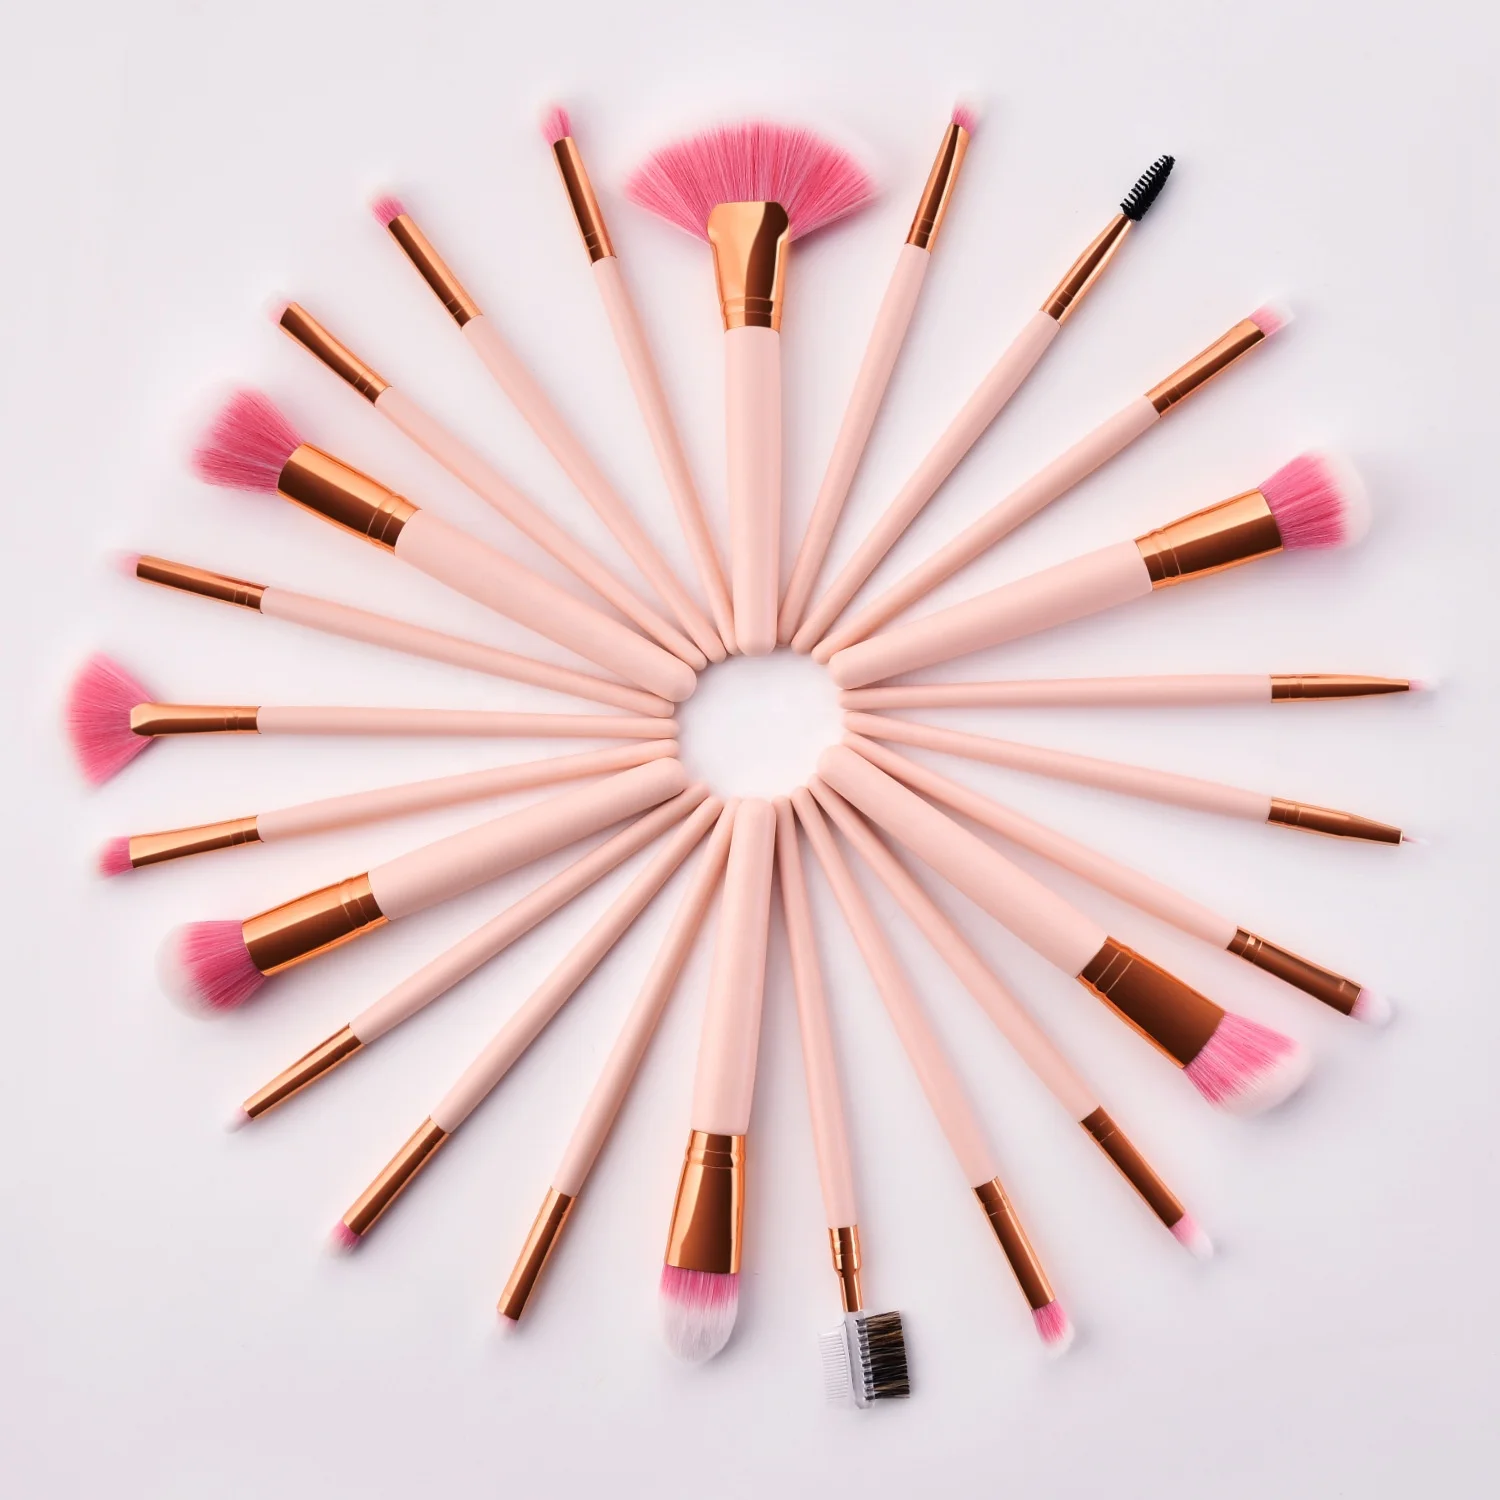 

Hot Popular Pink wood handle Makeup Brushes 24PCS Beauty Brushes Makeup Cosmetics Kit Foundation Powder Blush Contour Make up br